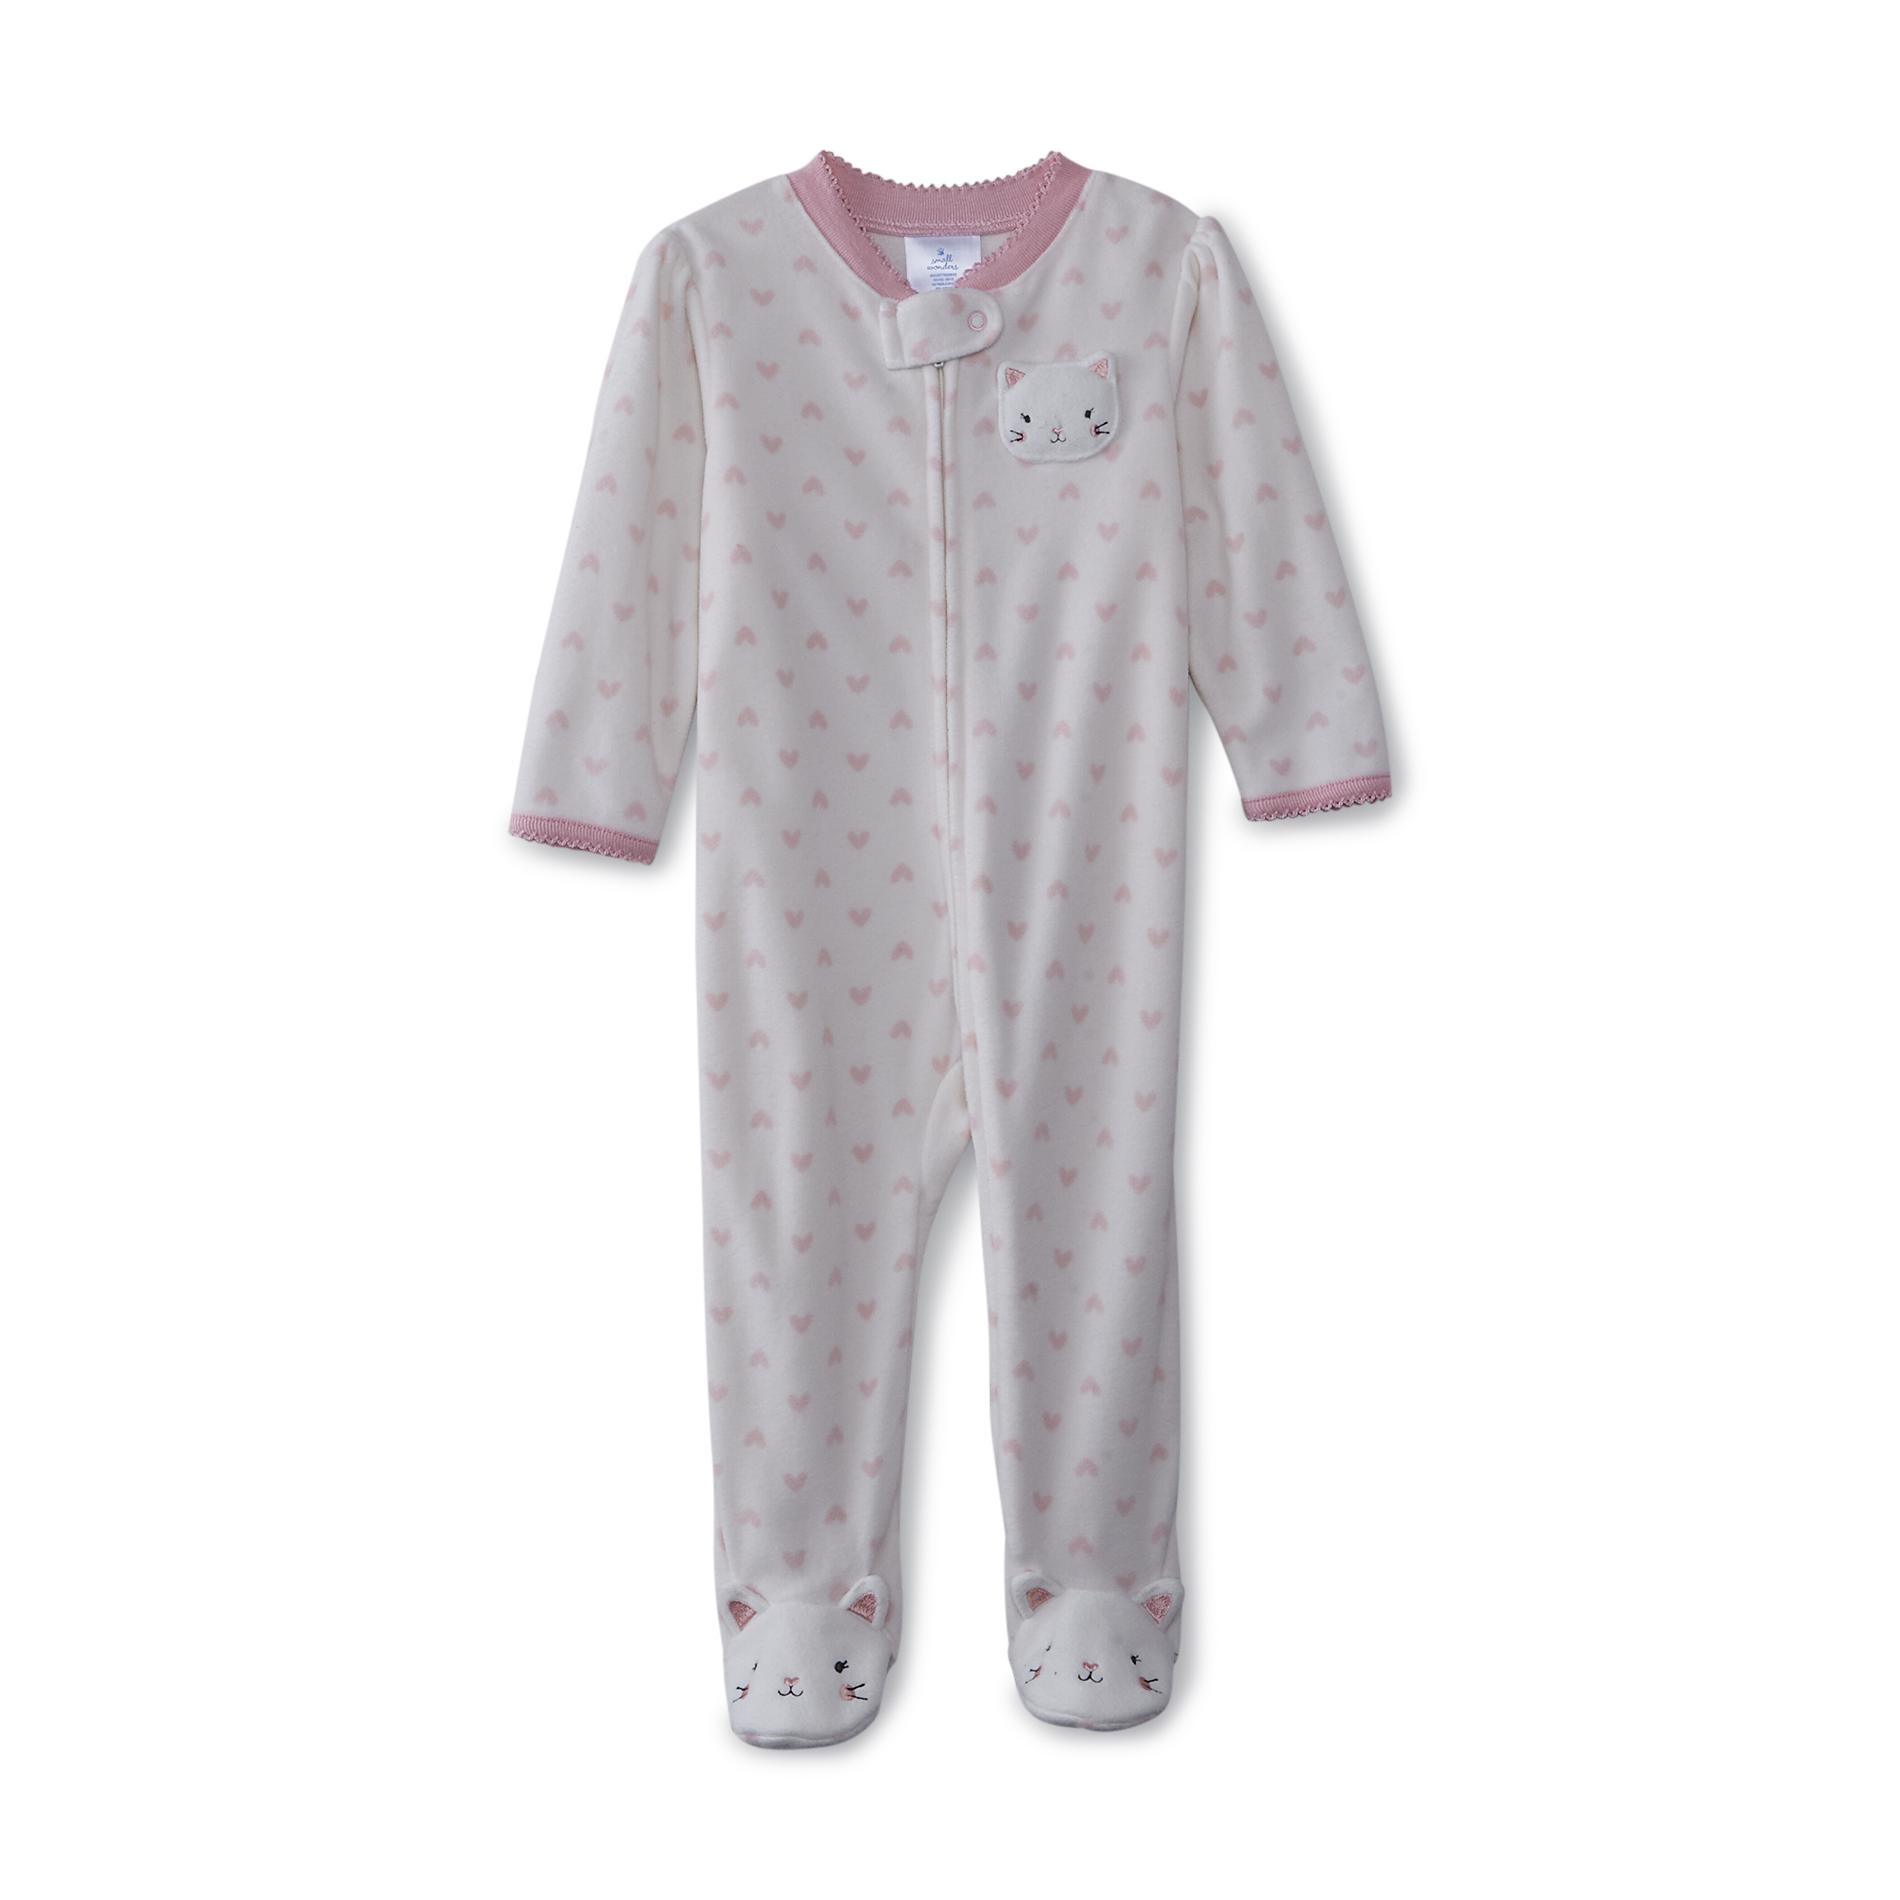 Small Wonders Newborn Girl's Microfleece Footed Pajamas - Kitten & Heart Print